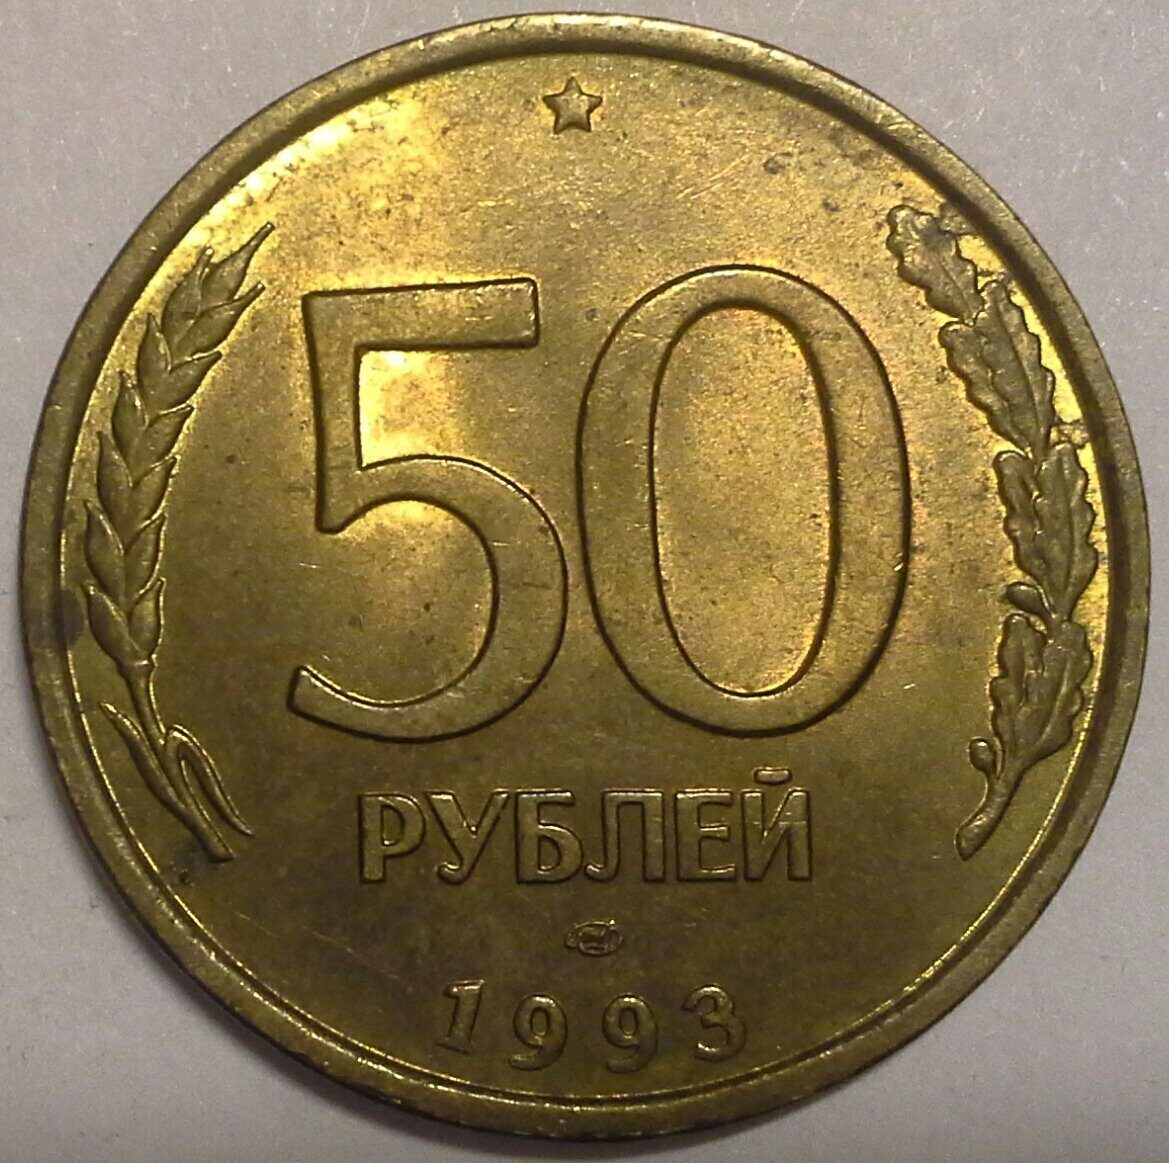 Рубли 1993 года фото